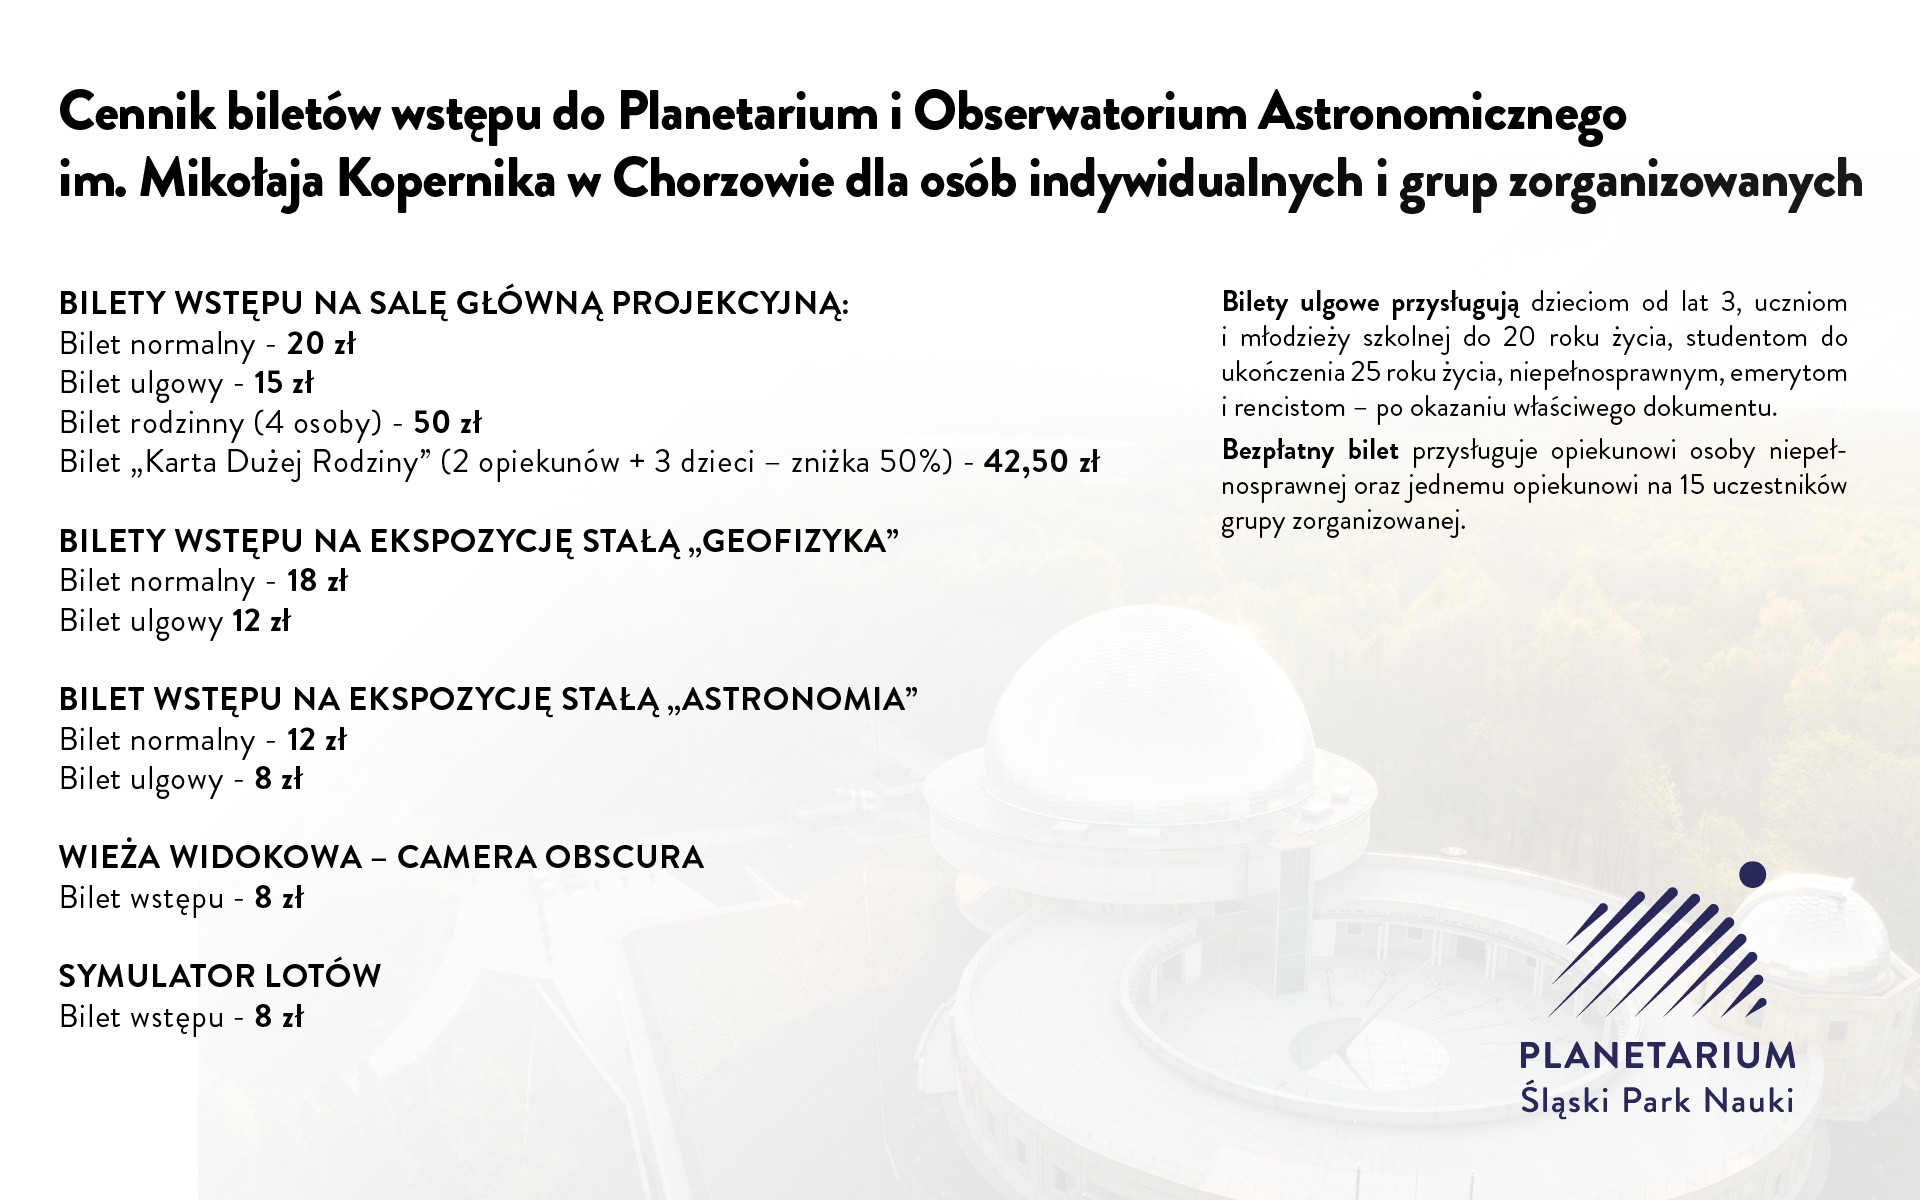 Mat. Planetarium - Śląski Park Nauki. Cennik biletów